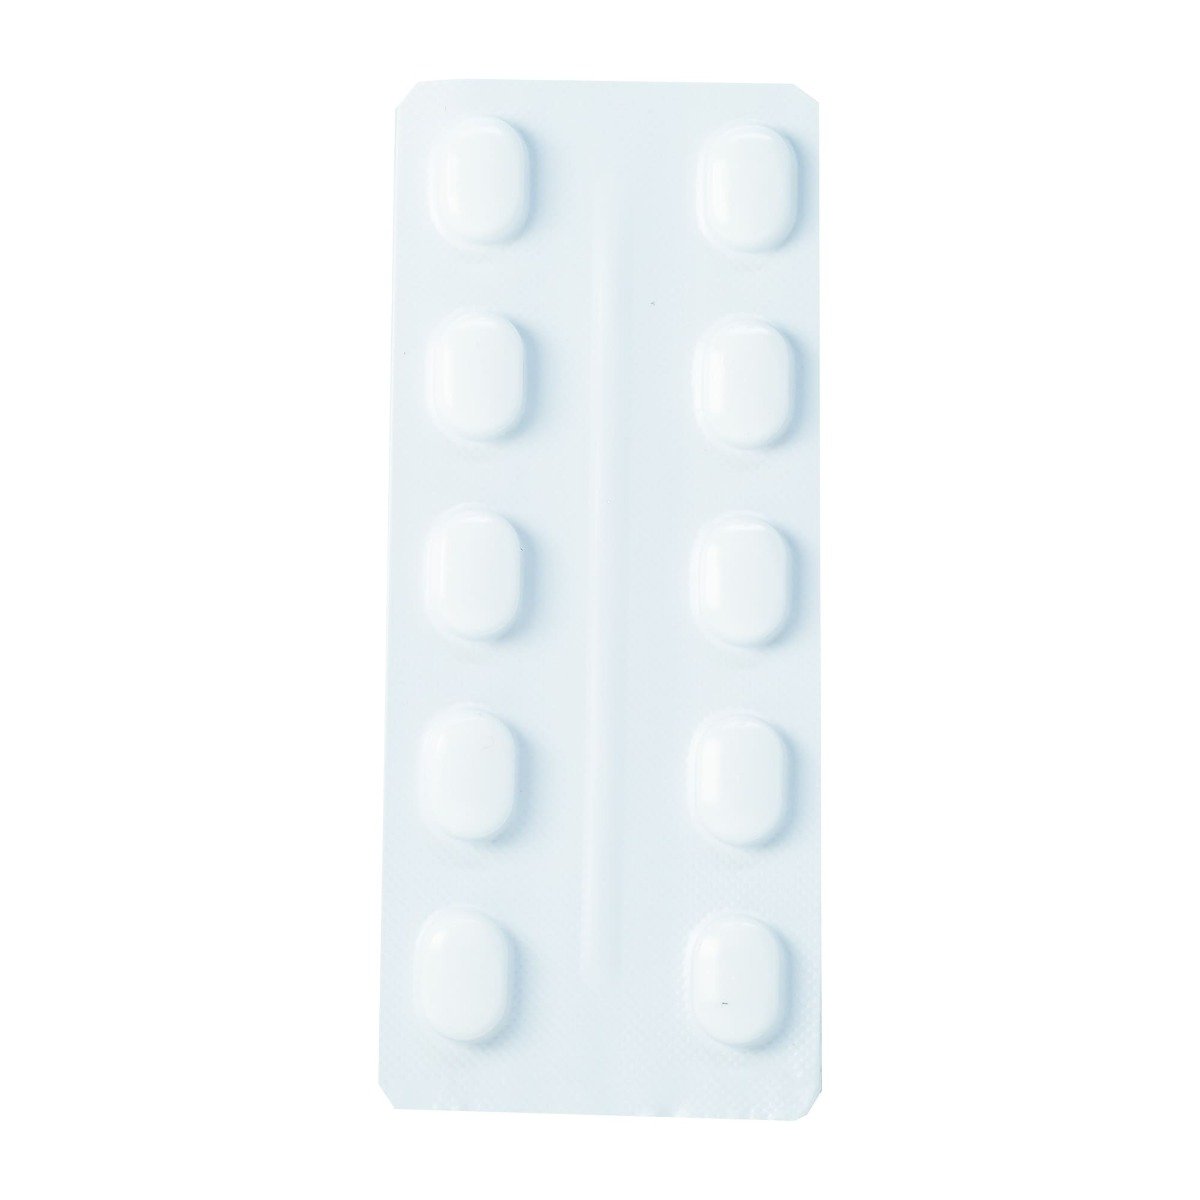 Arthfree 20 mg - 30 Tablets - Bloom Pharmacy